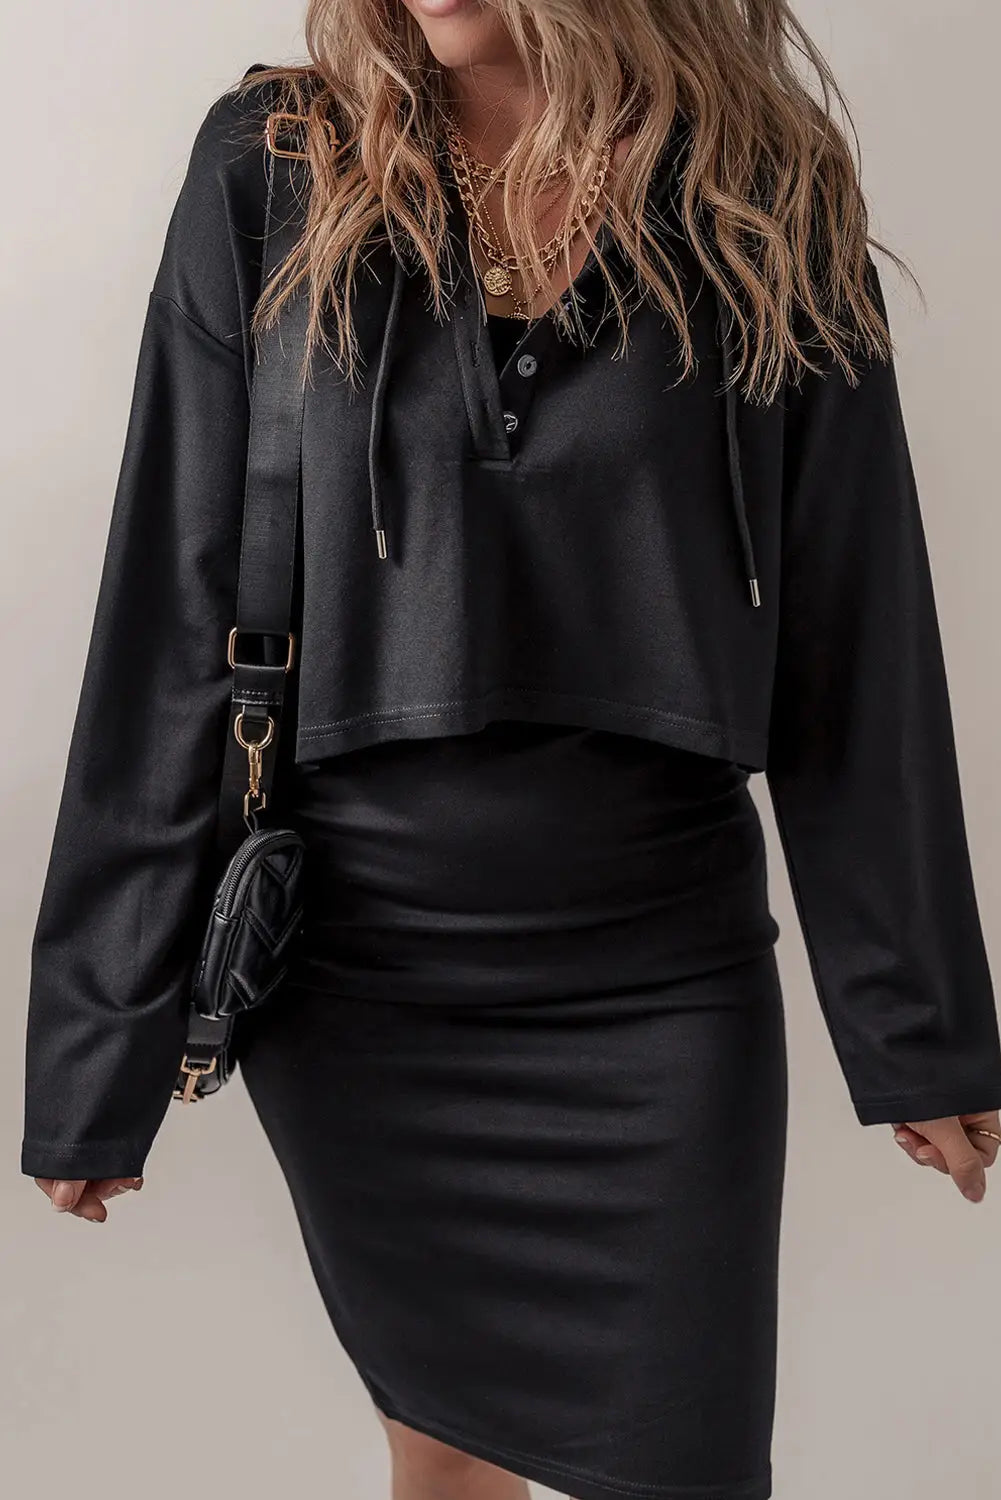 Black cropped hoodie slip dress 2pcs outfit - loungewear